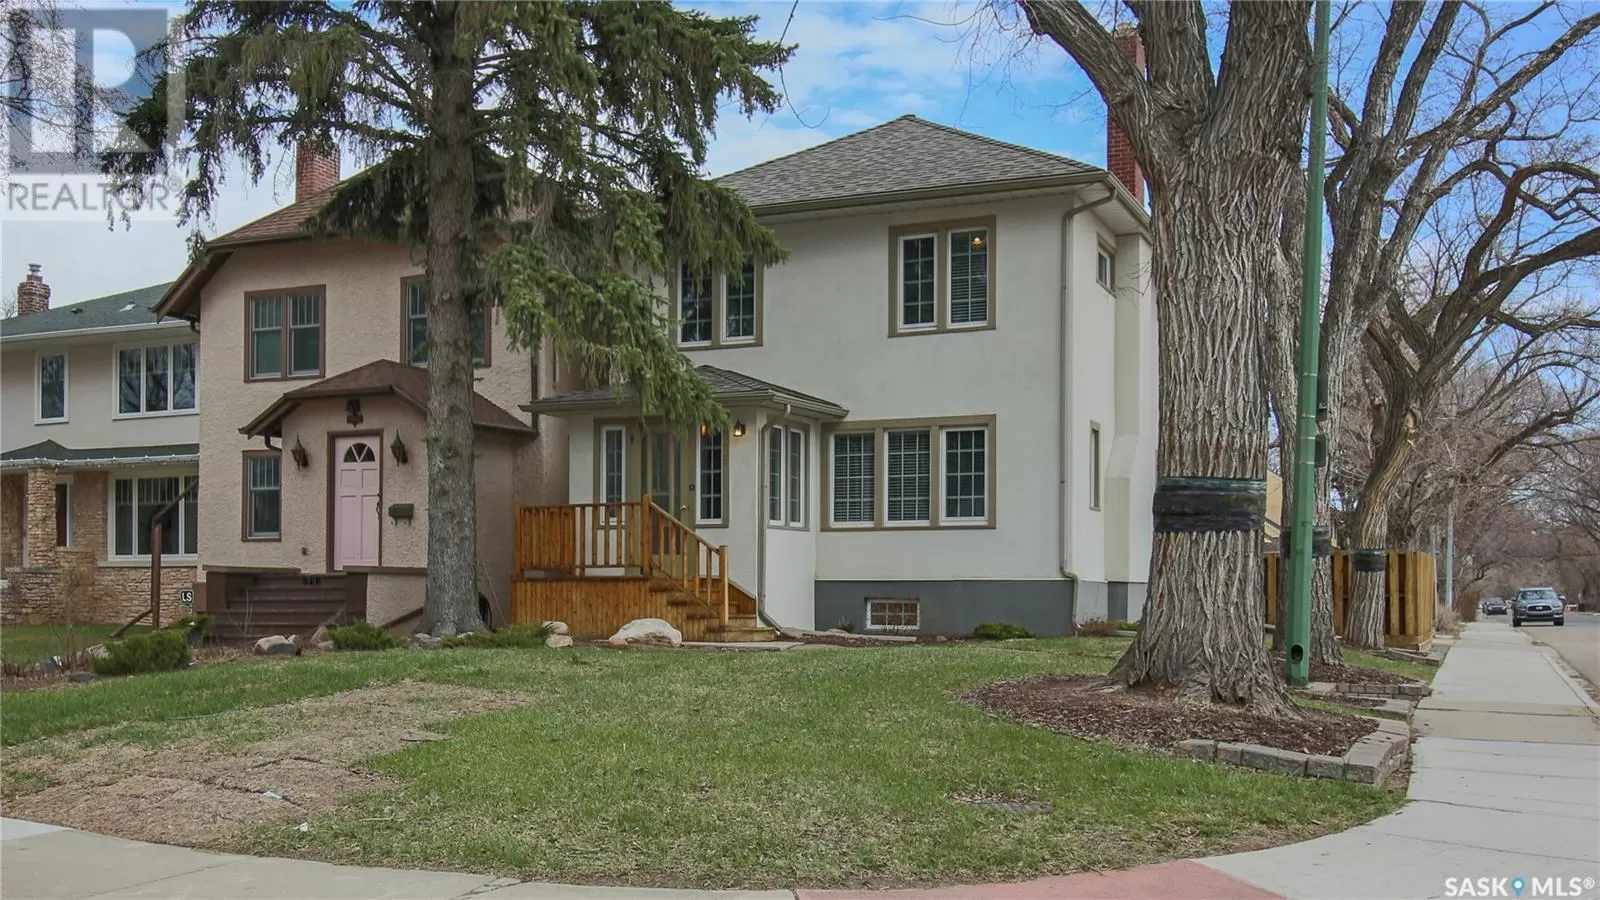 House for rent: 75 Connaught Crescent, Regina, Saskatchewan S4T 6M8